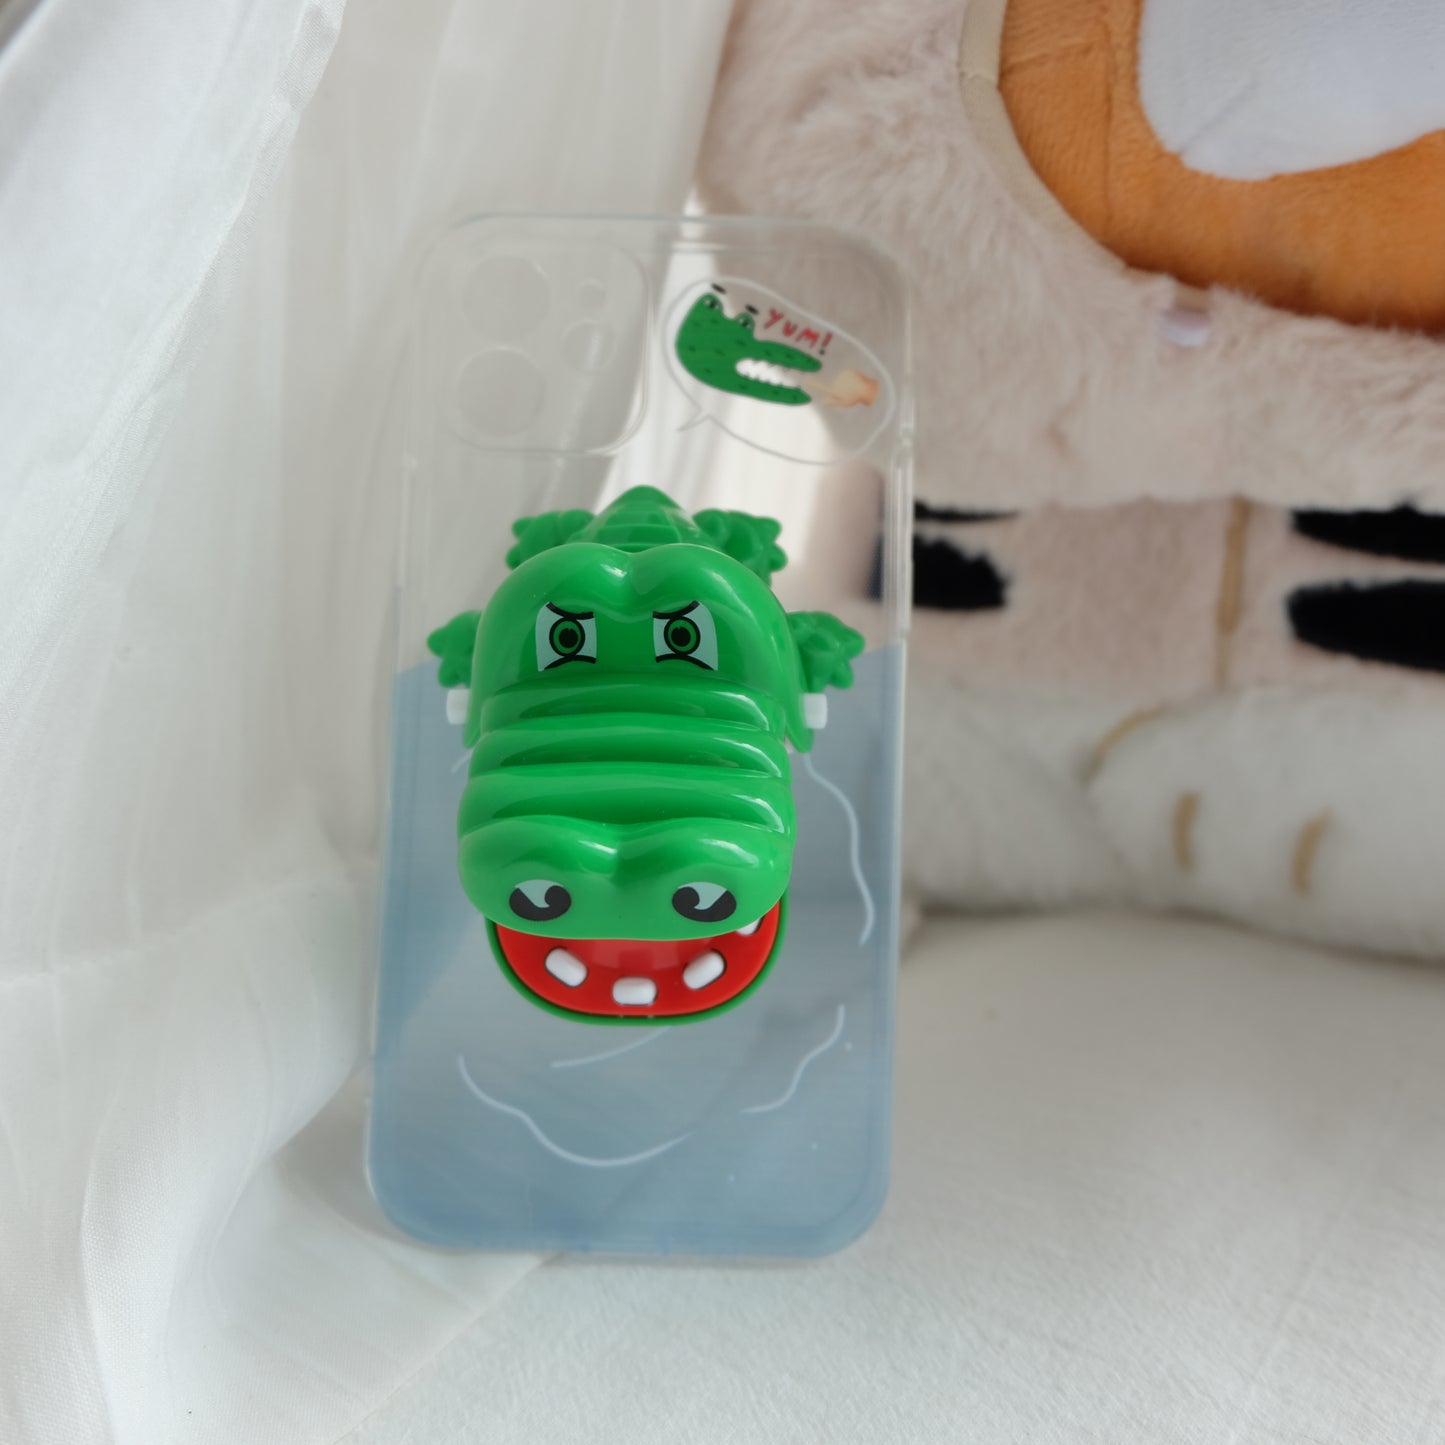 Crocodile teeth toy phone case